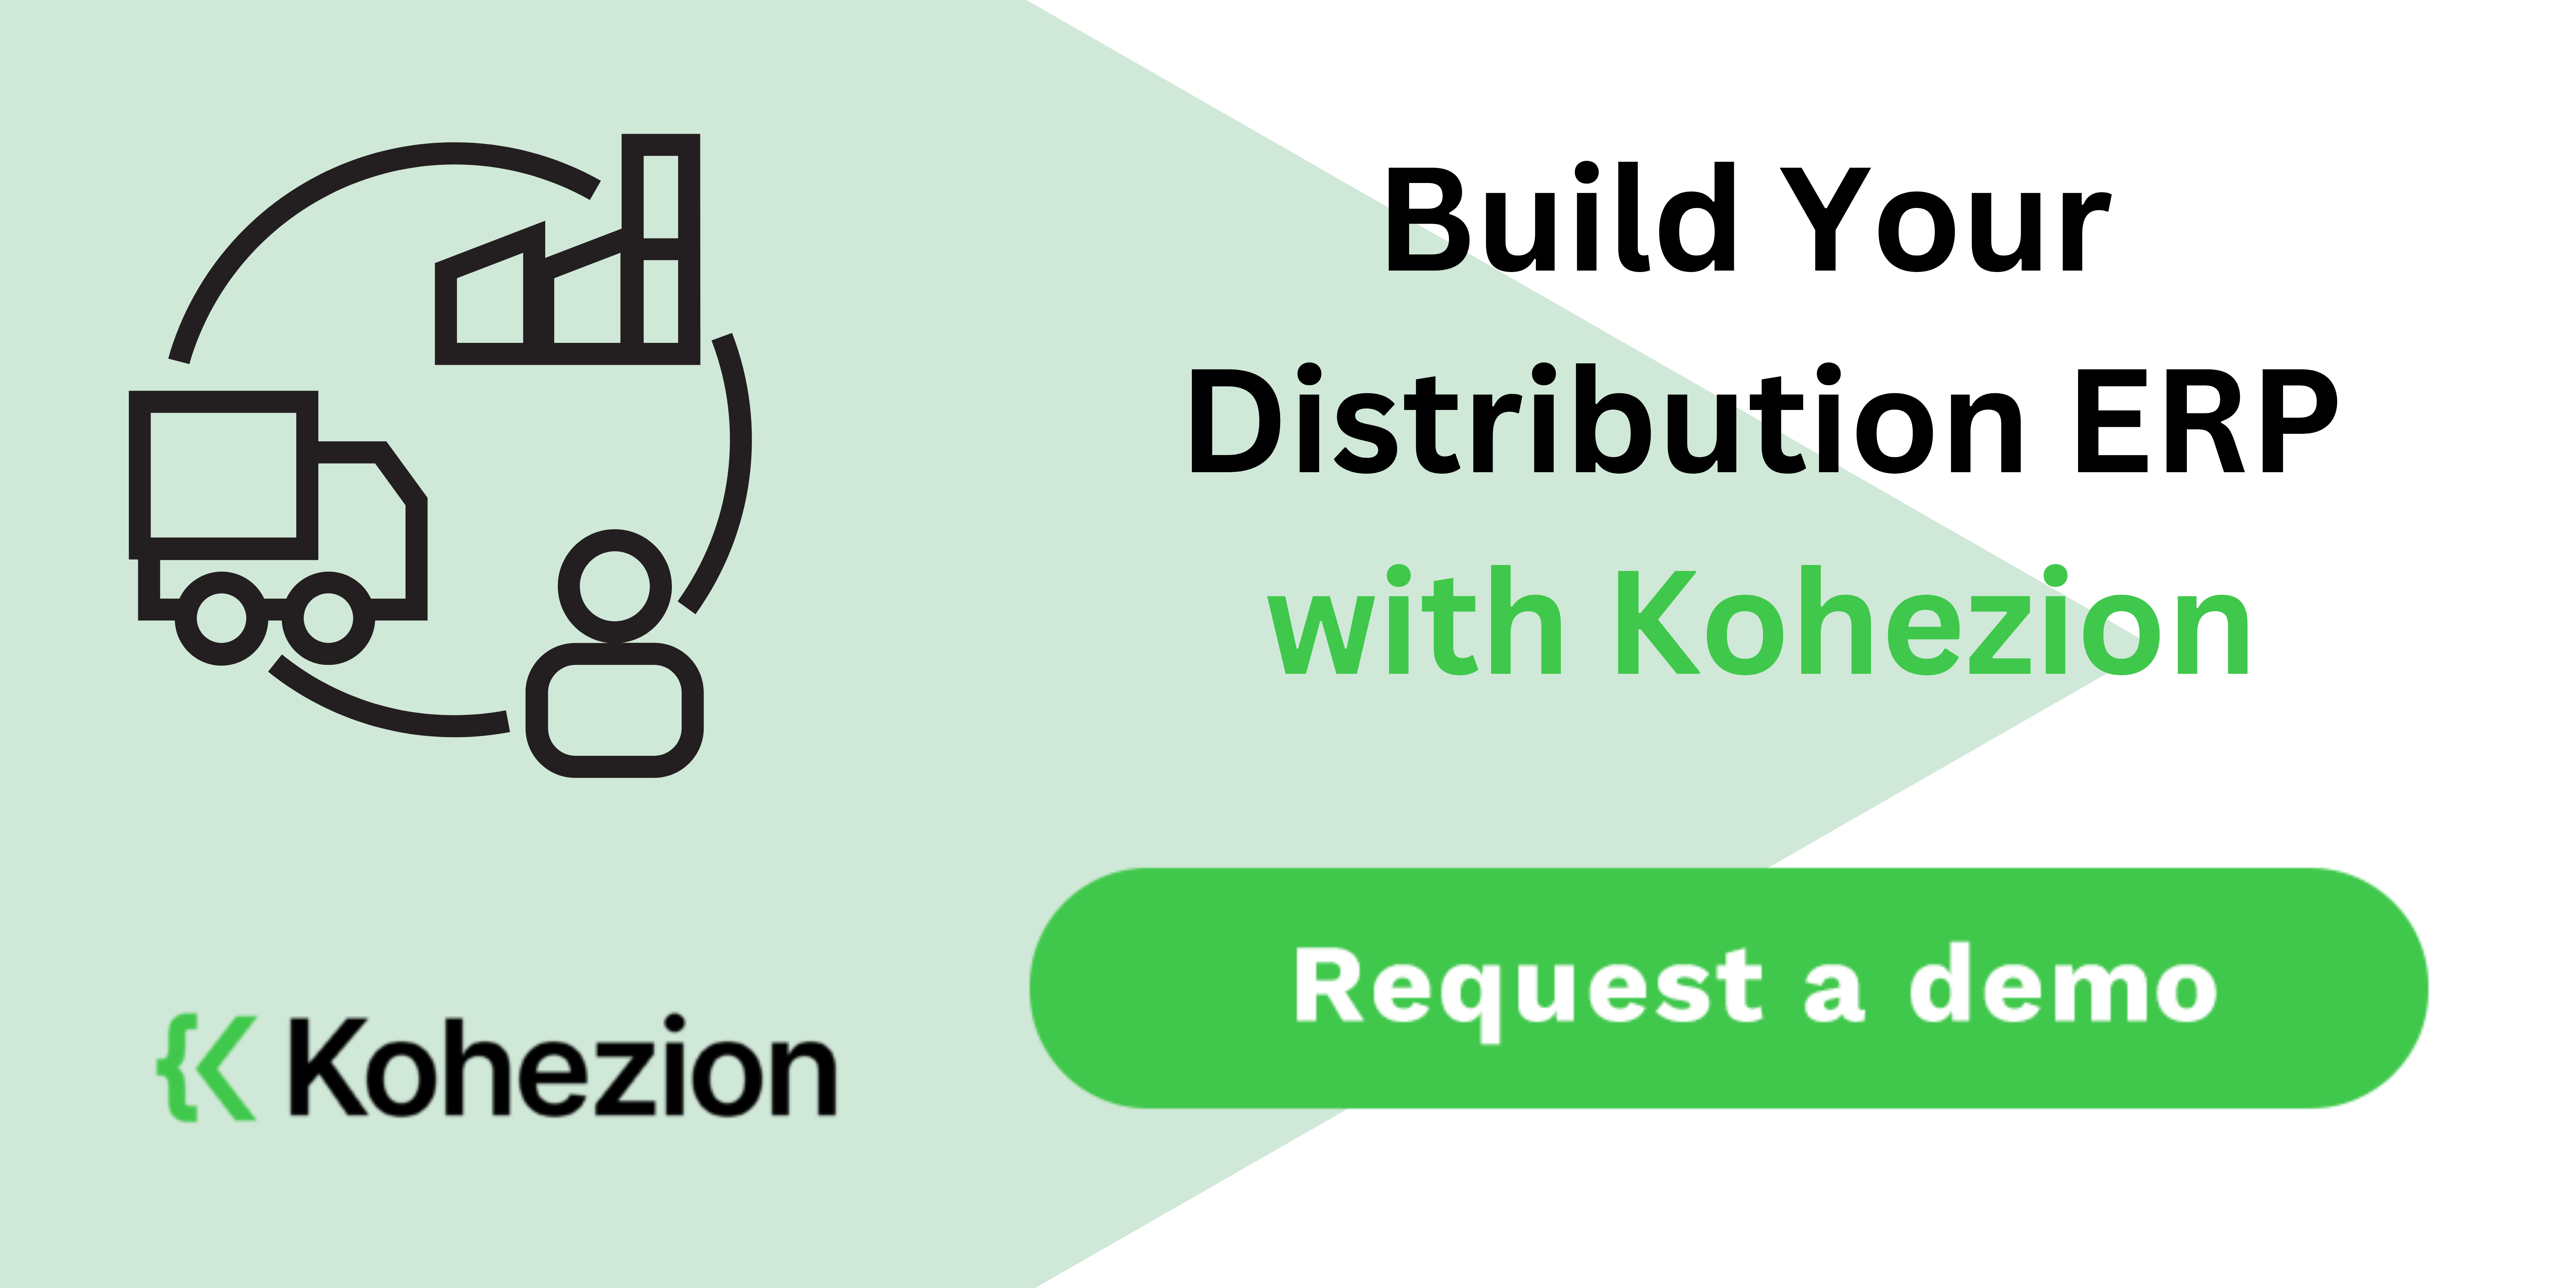 build your distribution erp with kohezion